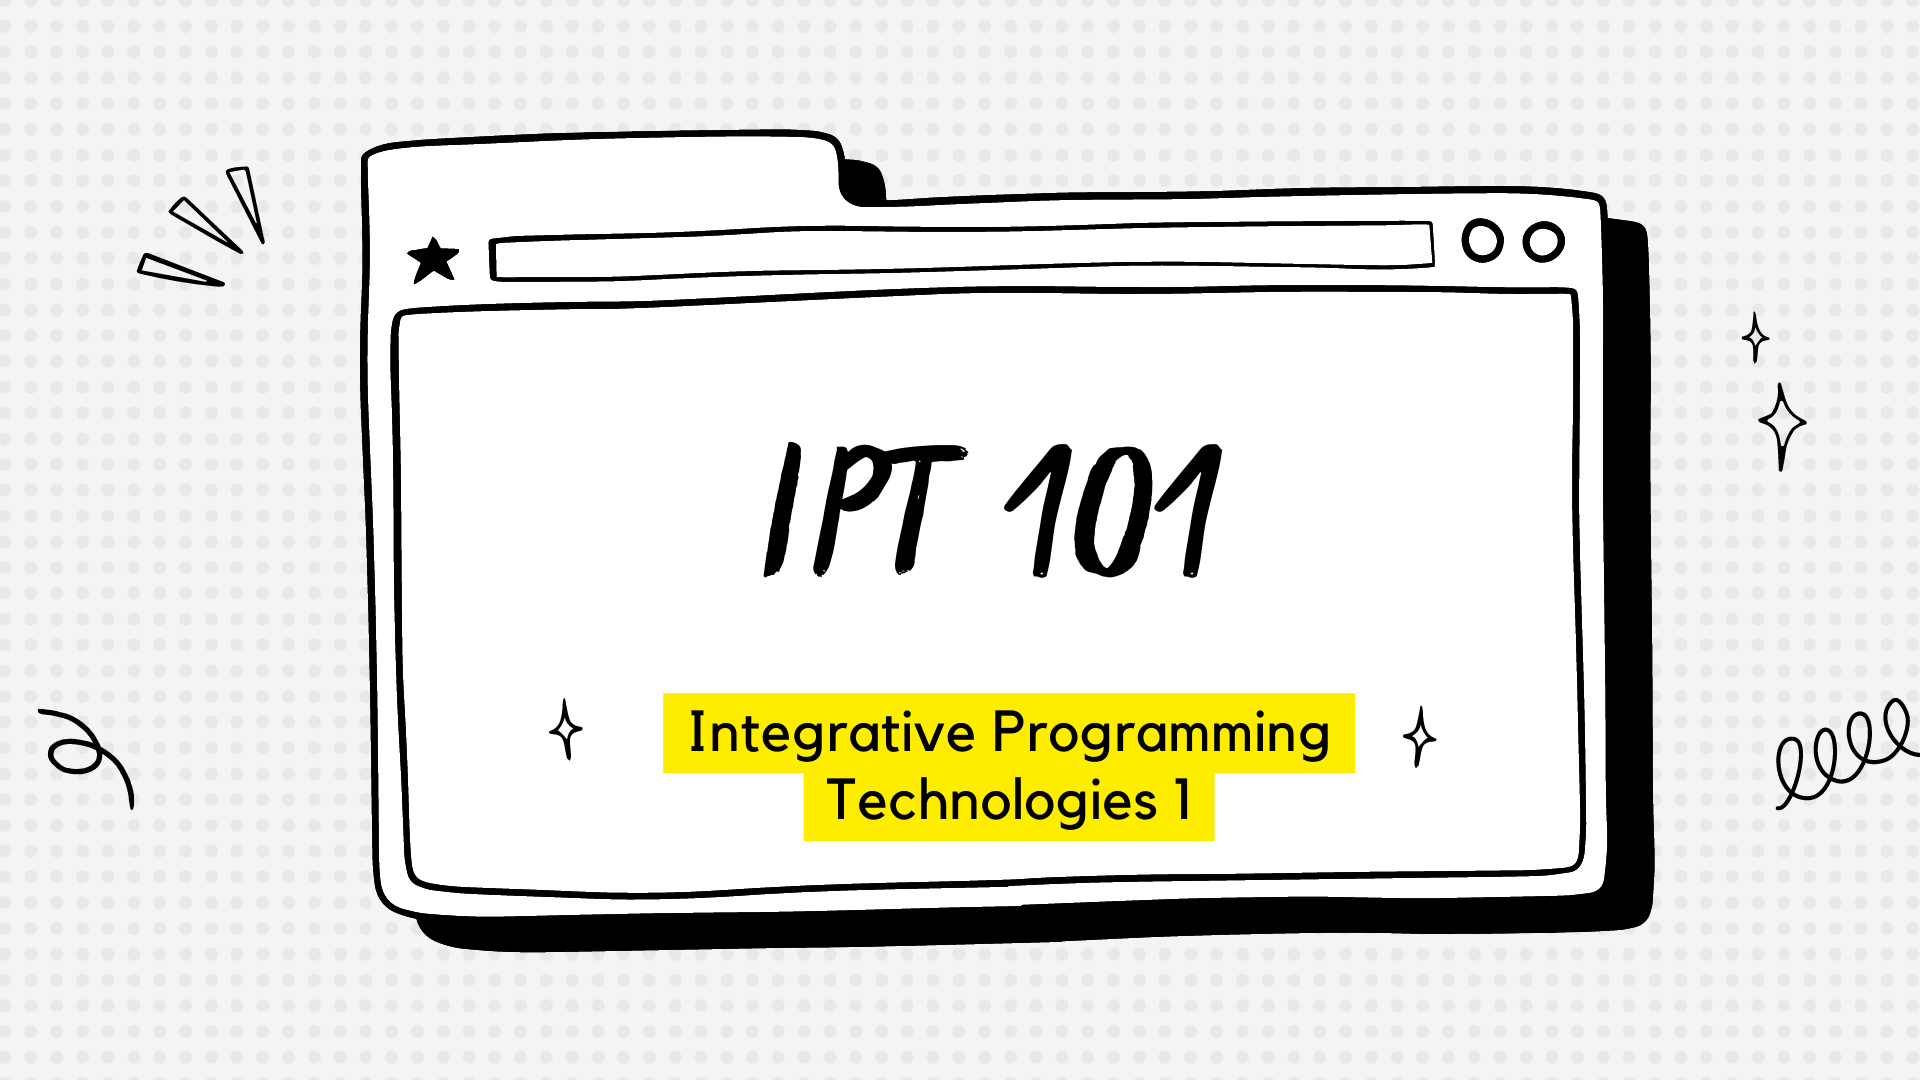 Integrative Programming Technologies 1